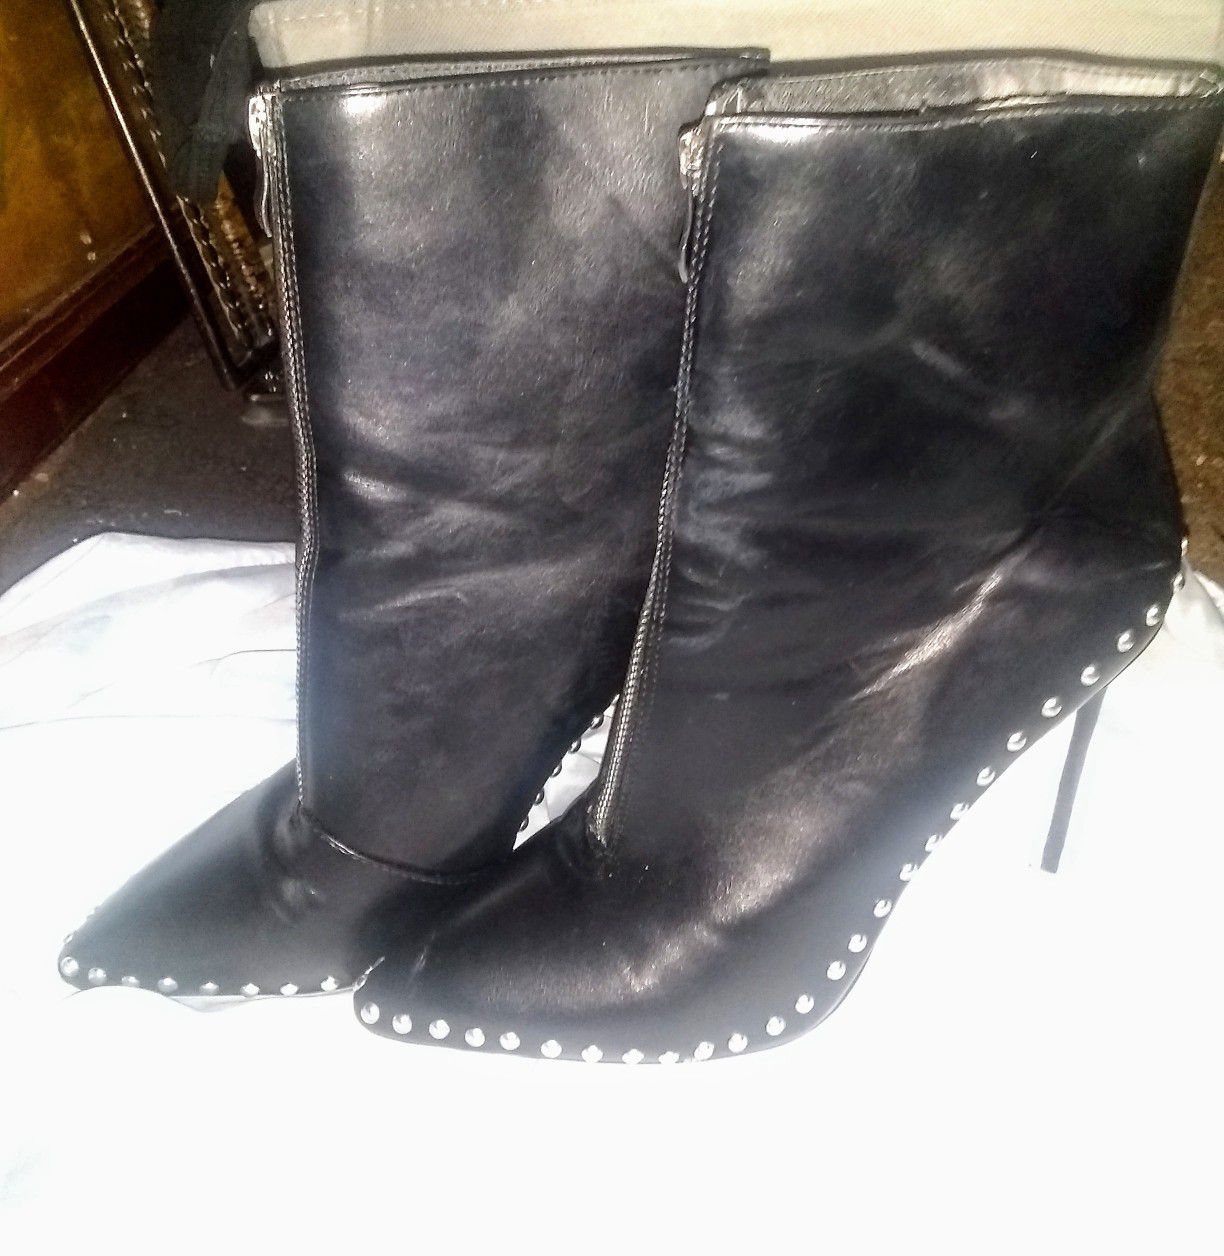 Pick up today!$12 brand new never worn women's size 10 stud bottom heel boots